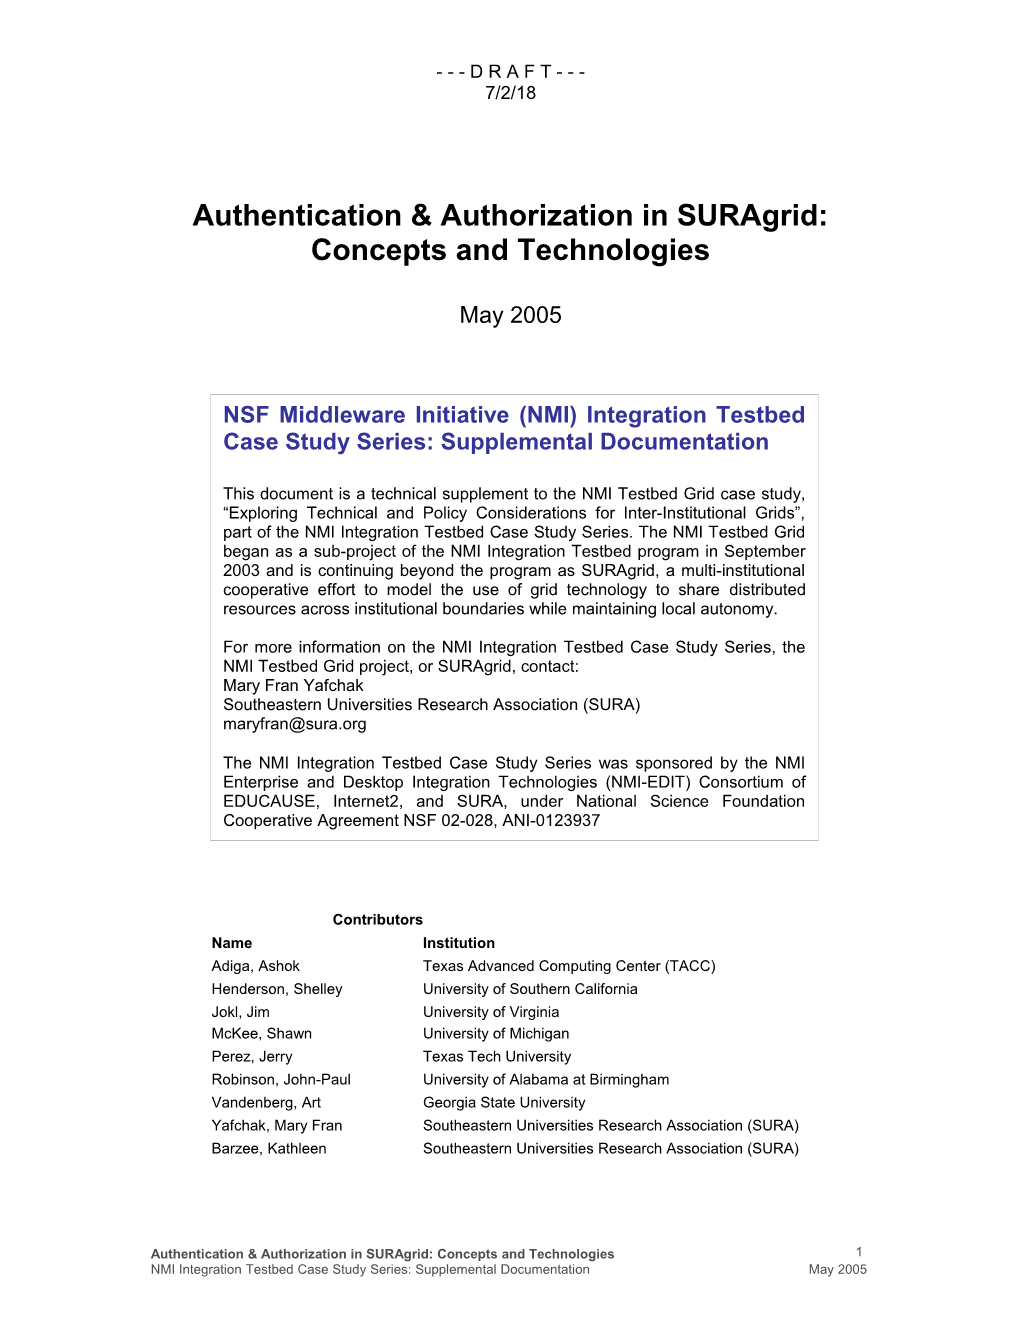 Authentication & Authorization in Suragrid